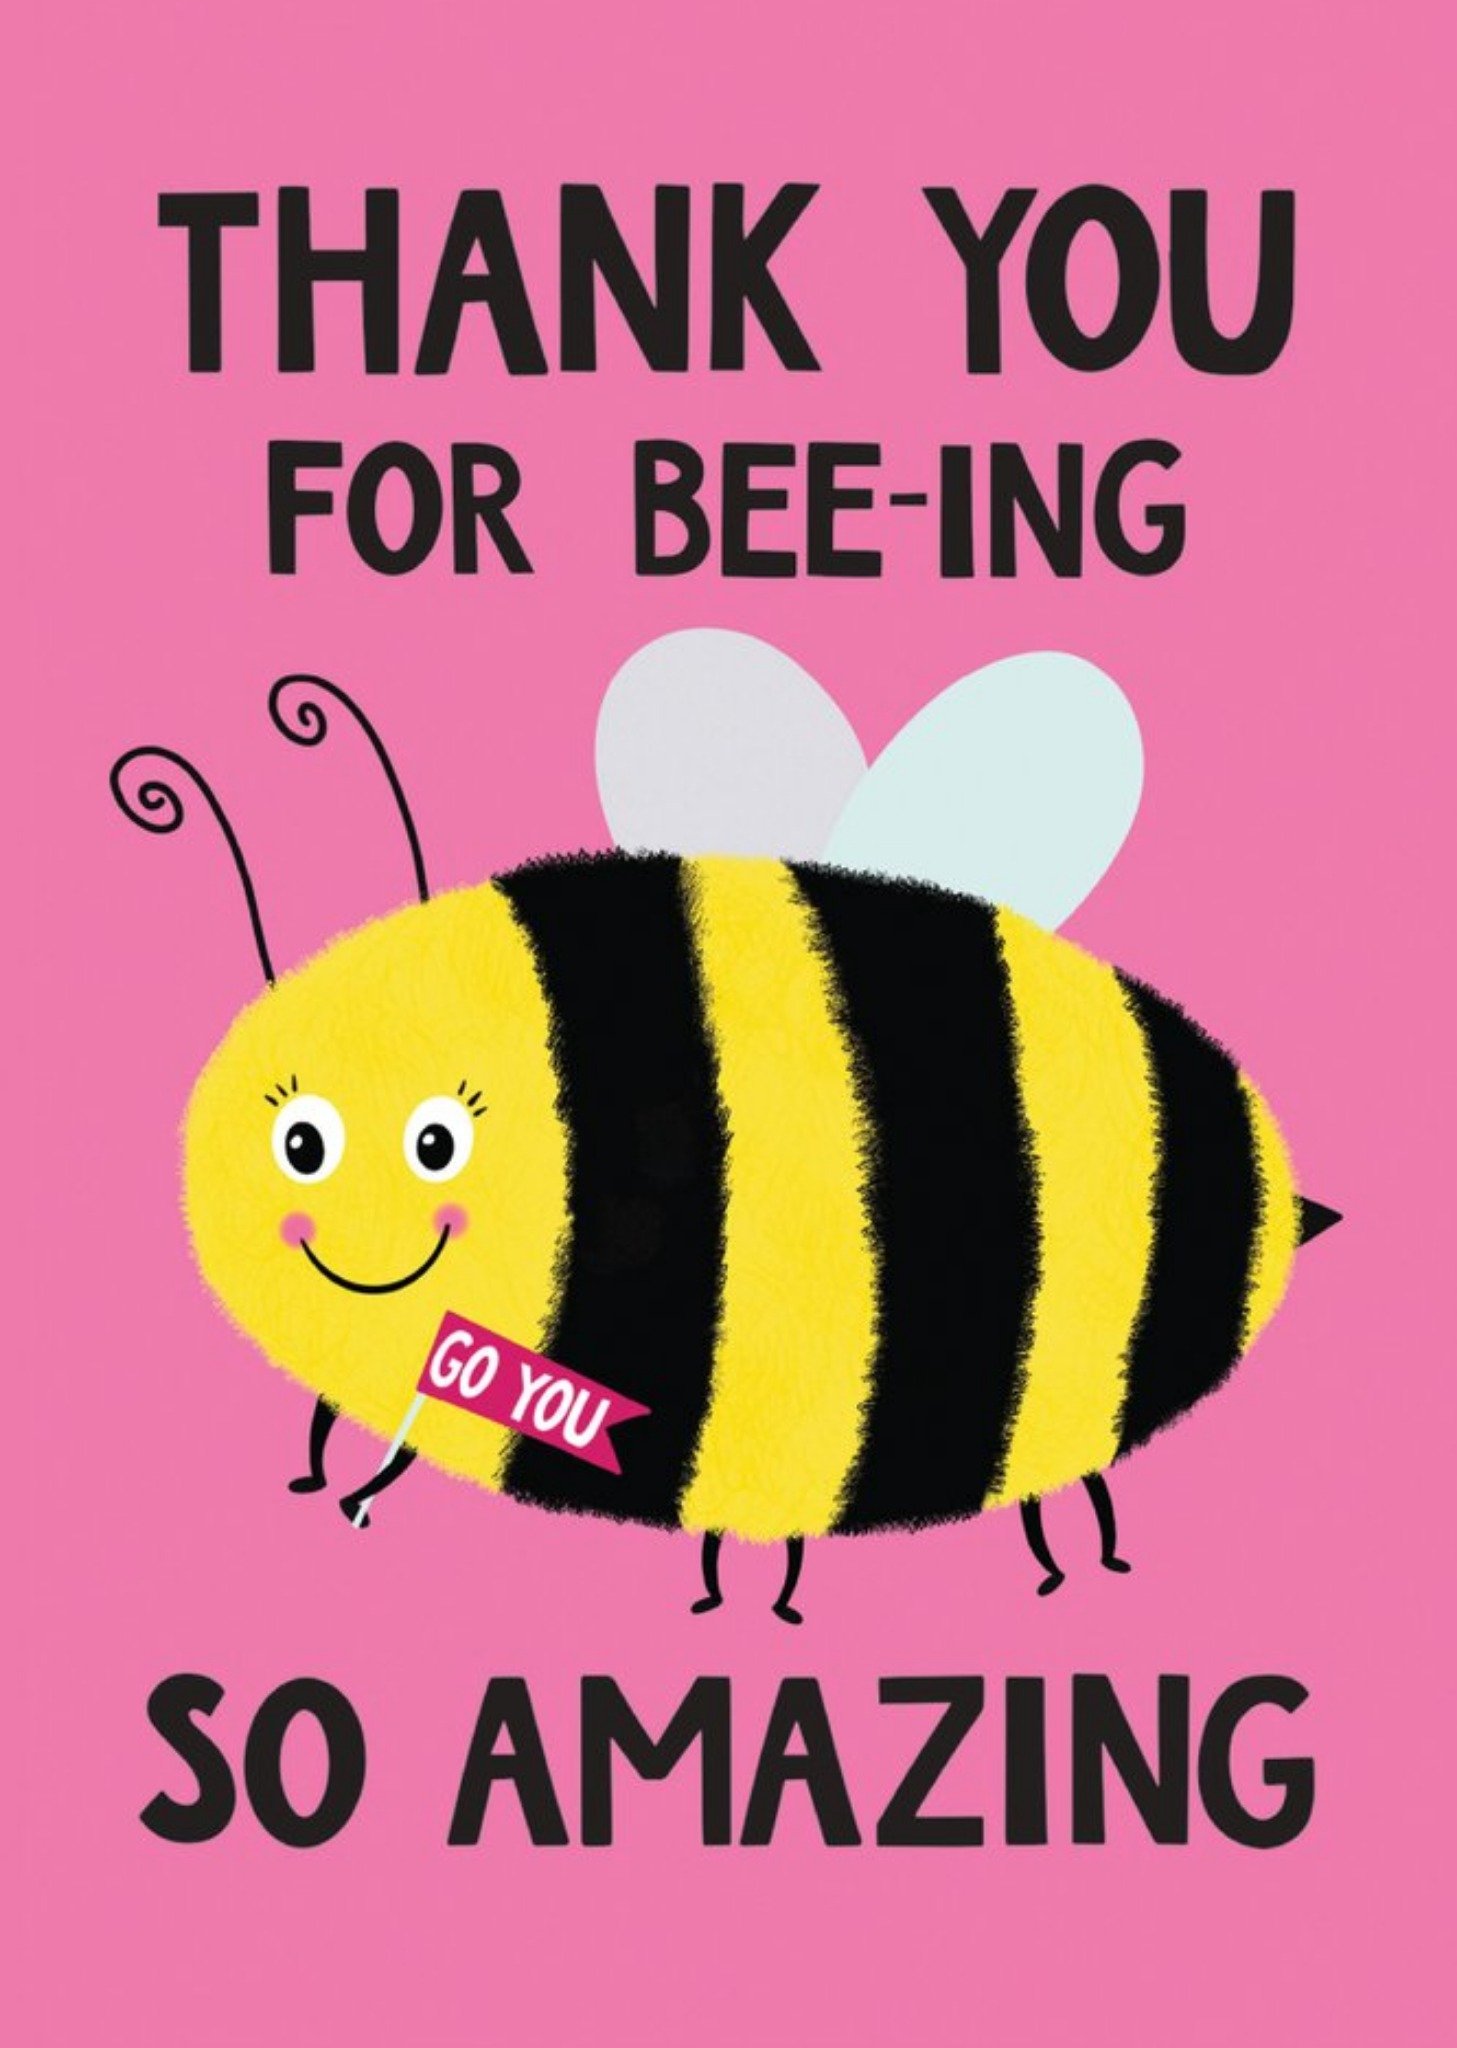 Moonpig Bee-Ing So Amazing Thanks You Card Ecard